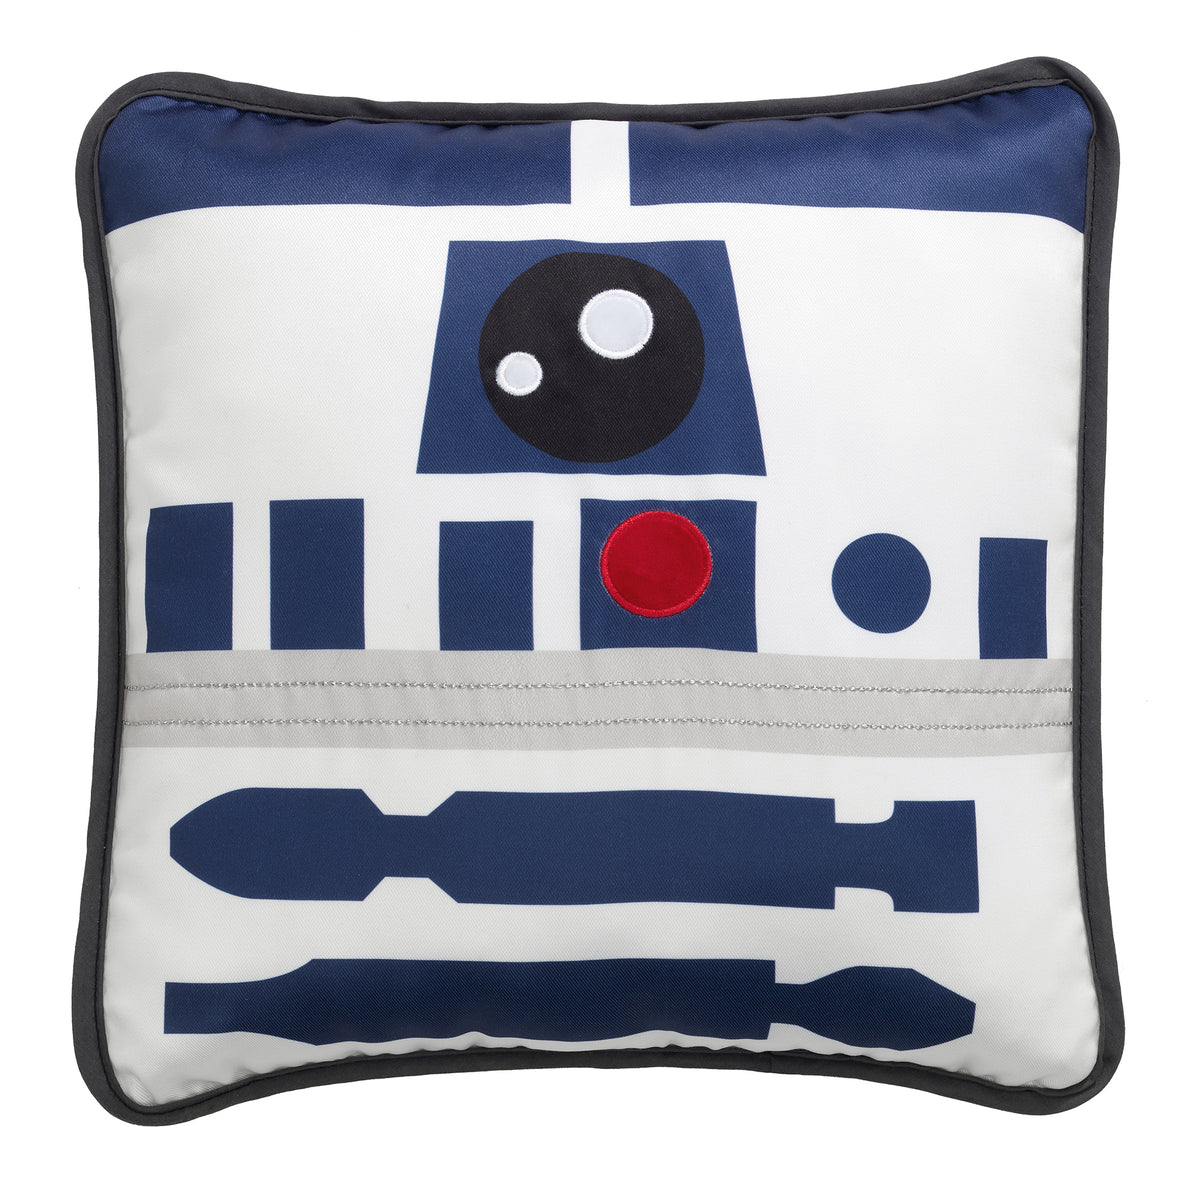 Cool Star Wars R2d2 Home Decorative Cotton Linen Square Throw Pillow Case  Cushion Cover Art Design